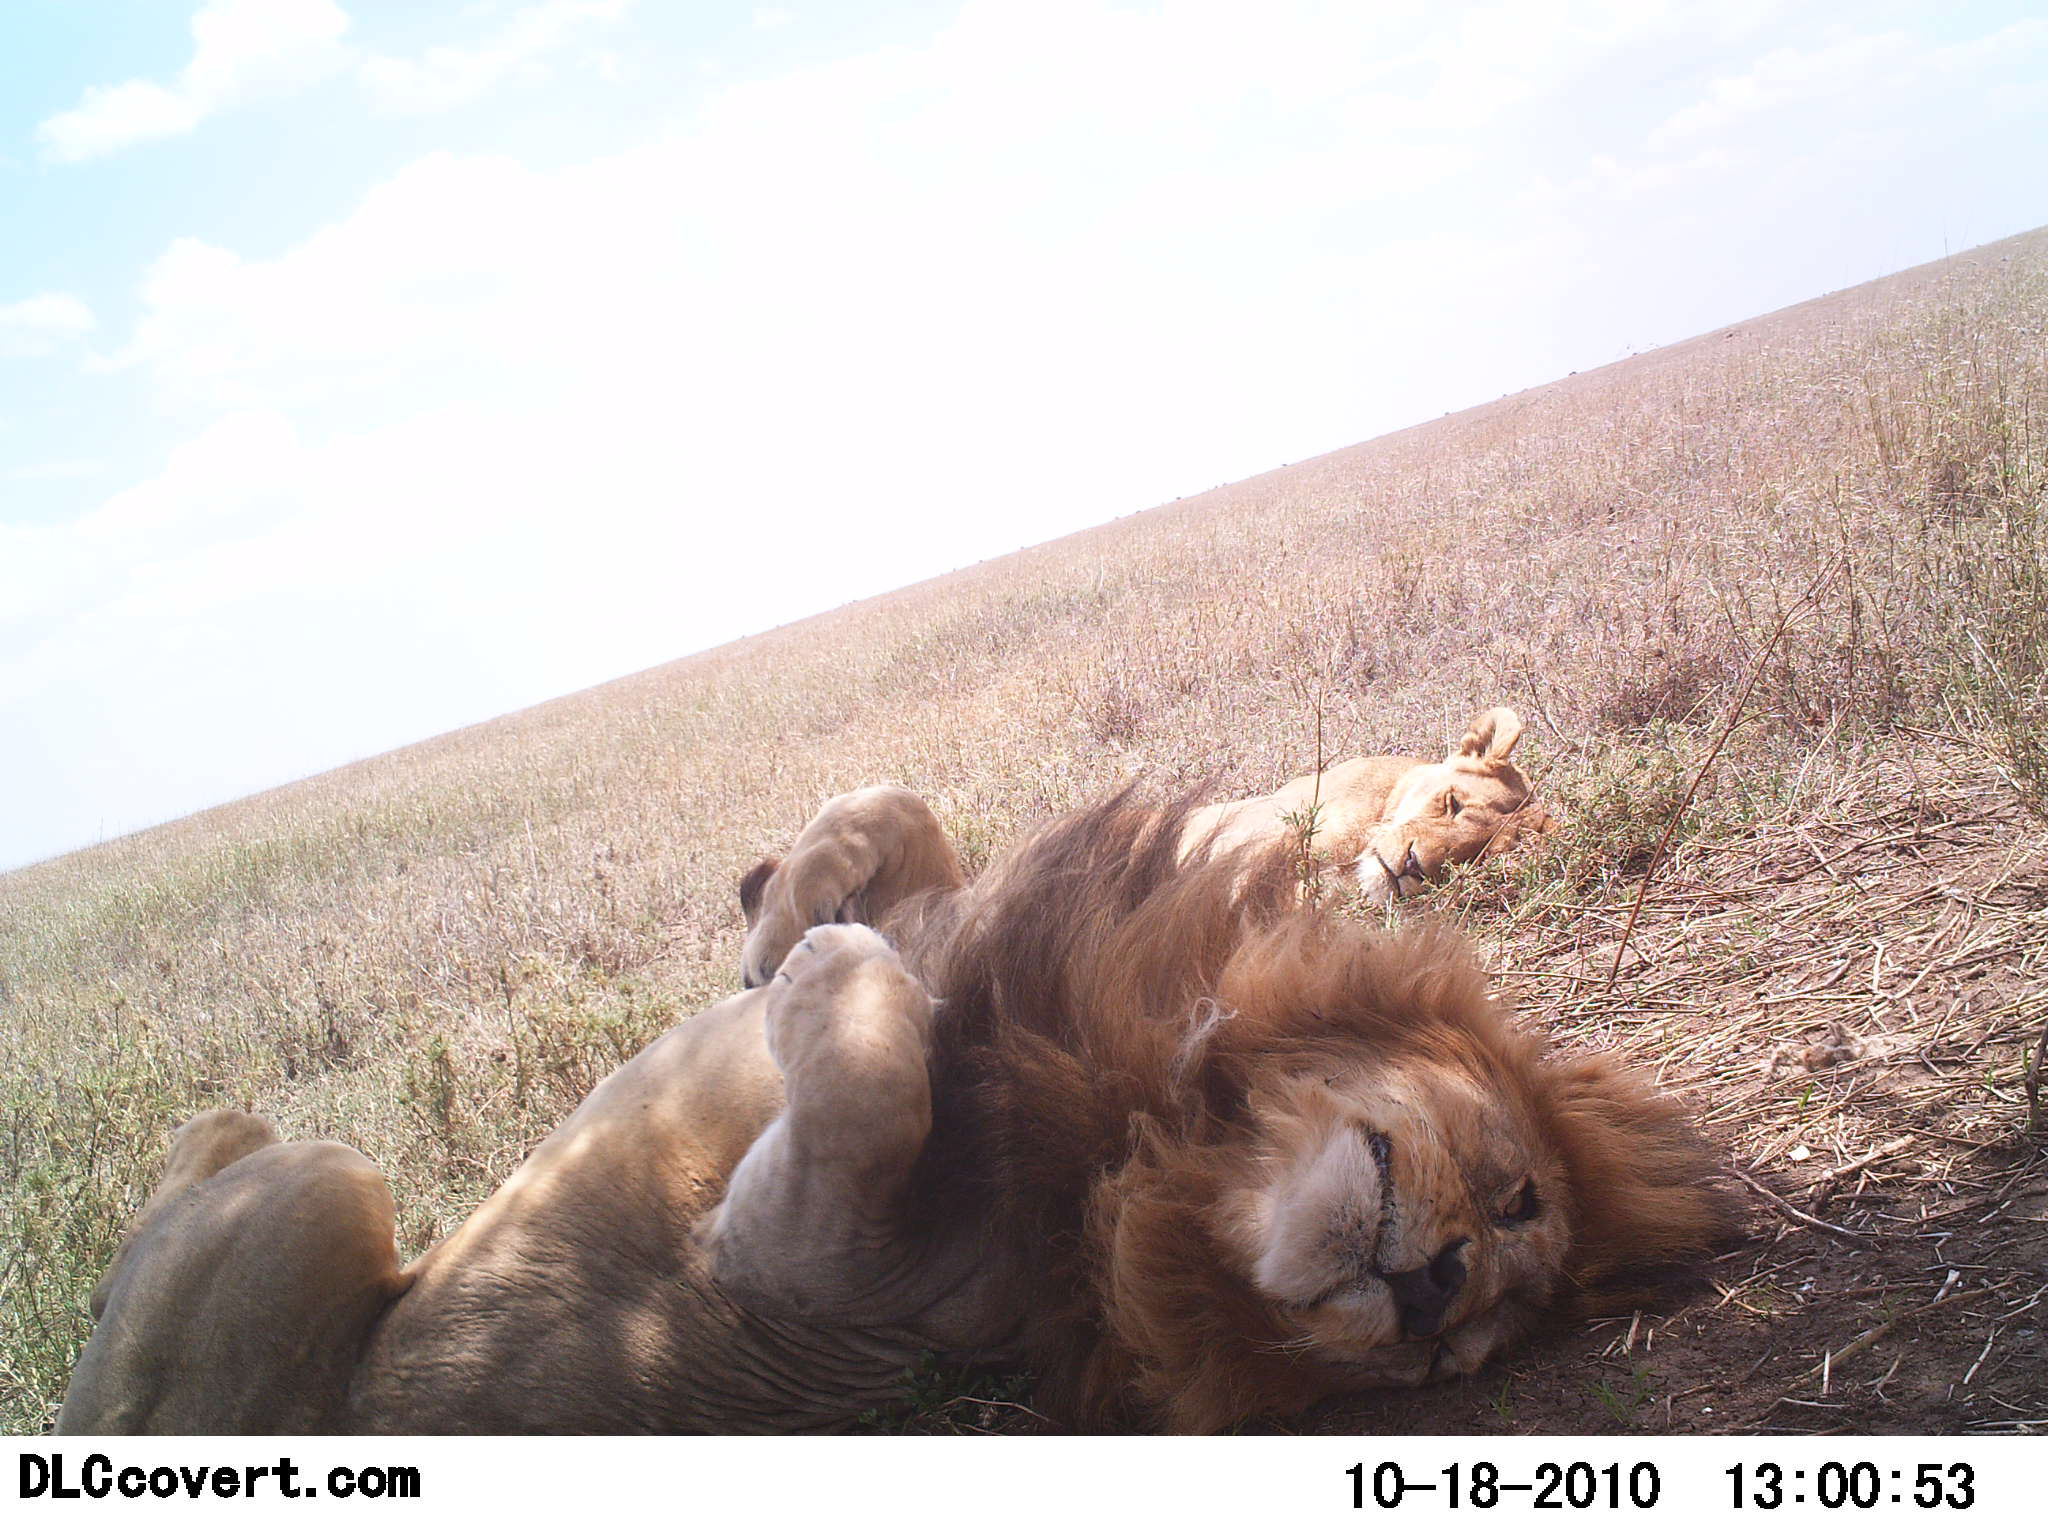 Image from the Snapshot Serengeti image database (http://lila.science/datasets/snapshot-serengeti)